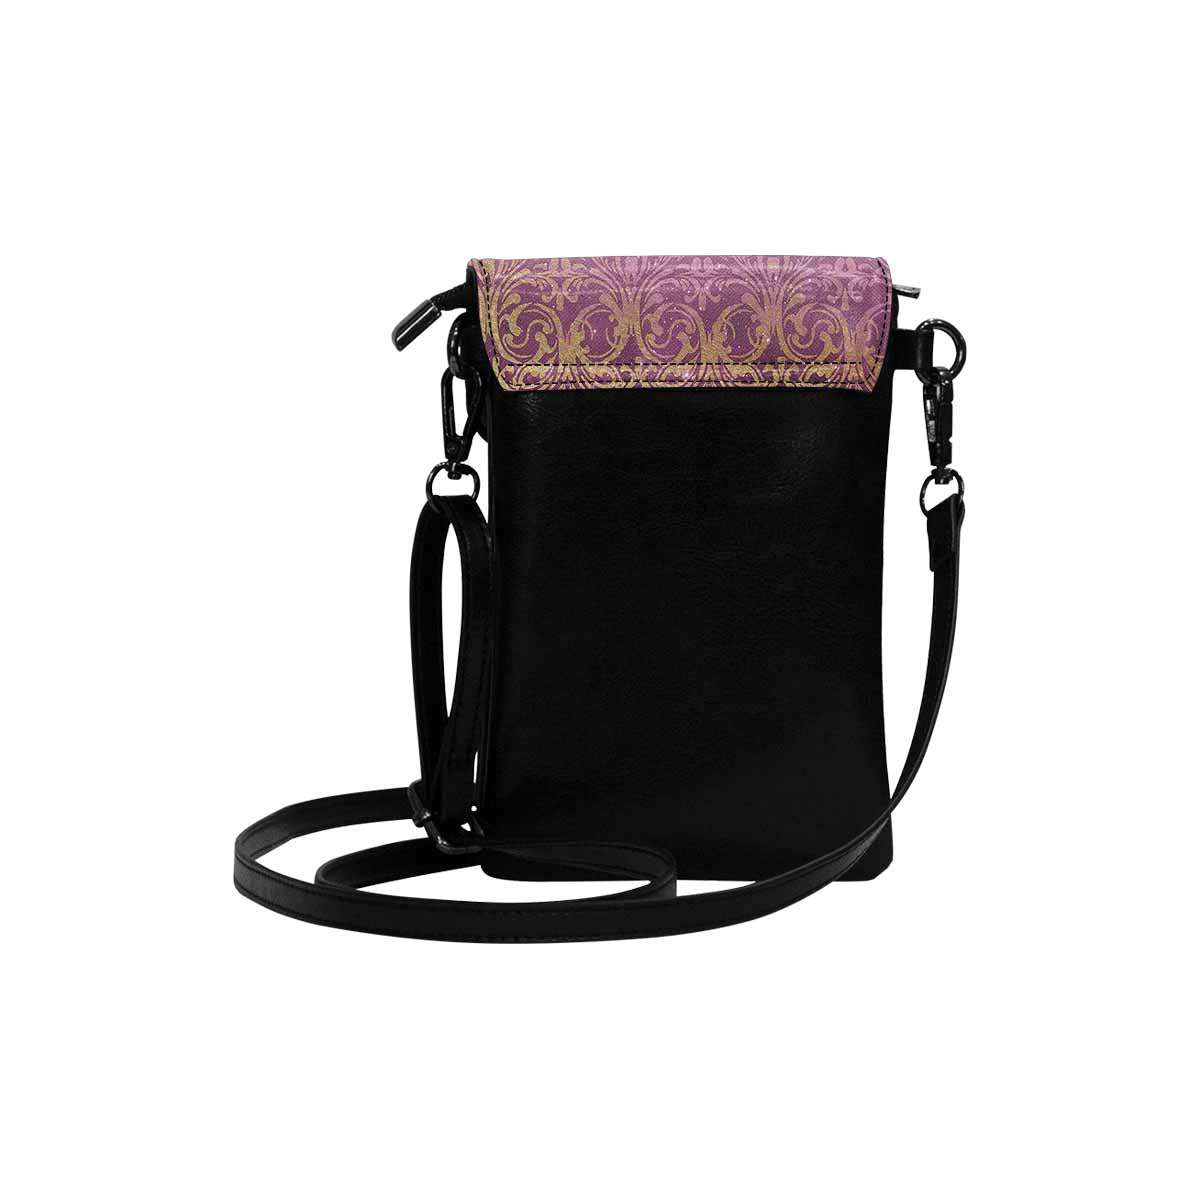 General Victorian cell phone purse, mobile purse, Design 42